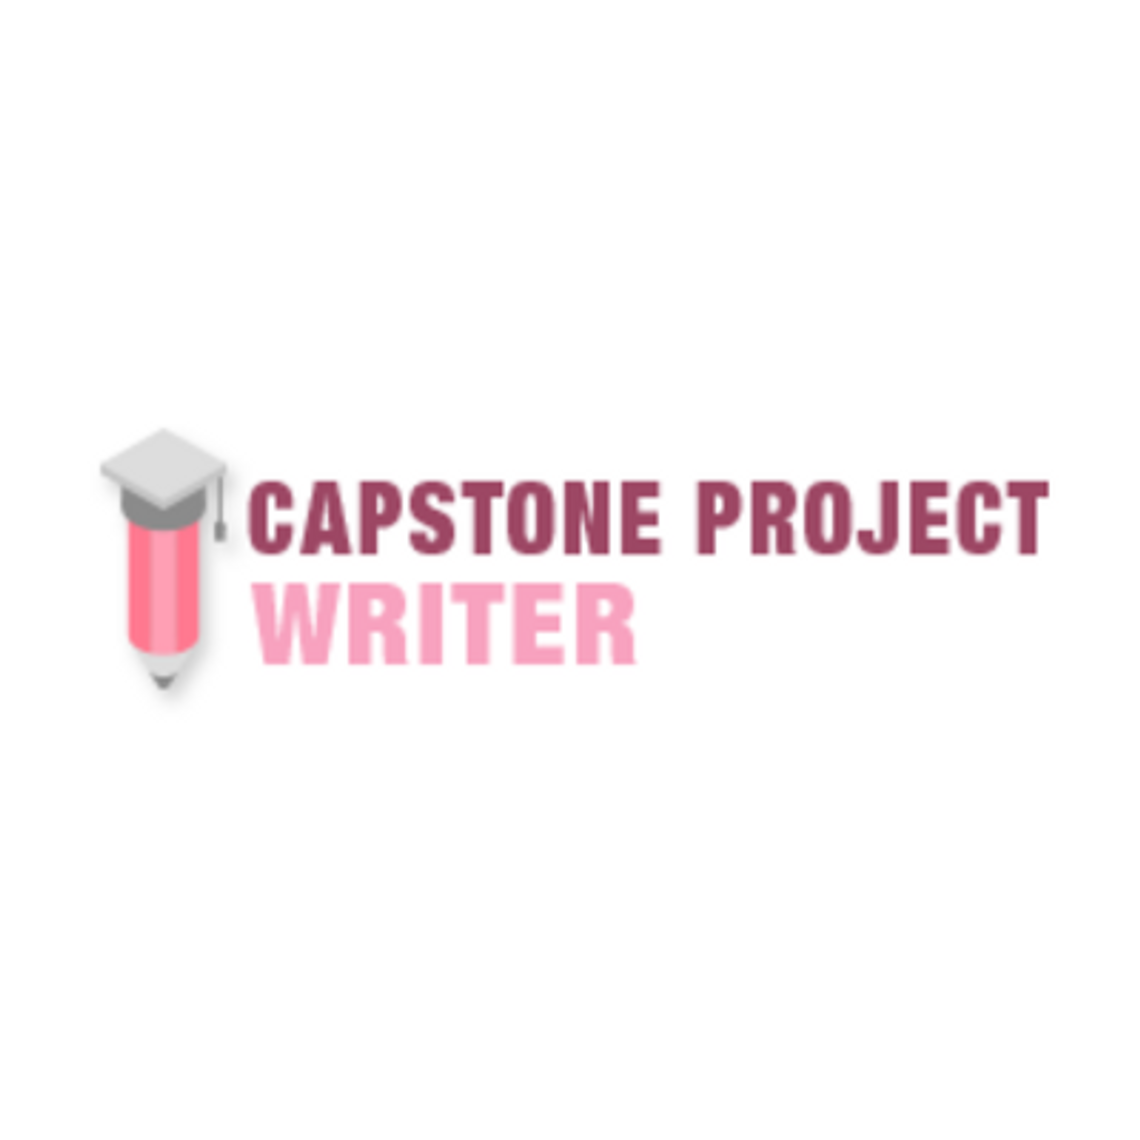 Capstone Project Writer | USA's Best Writing Agency